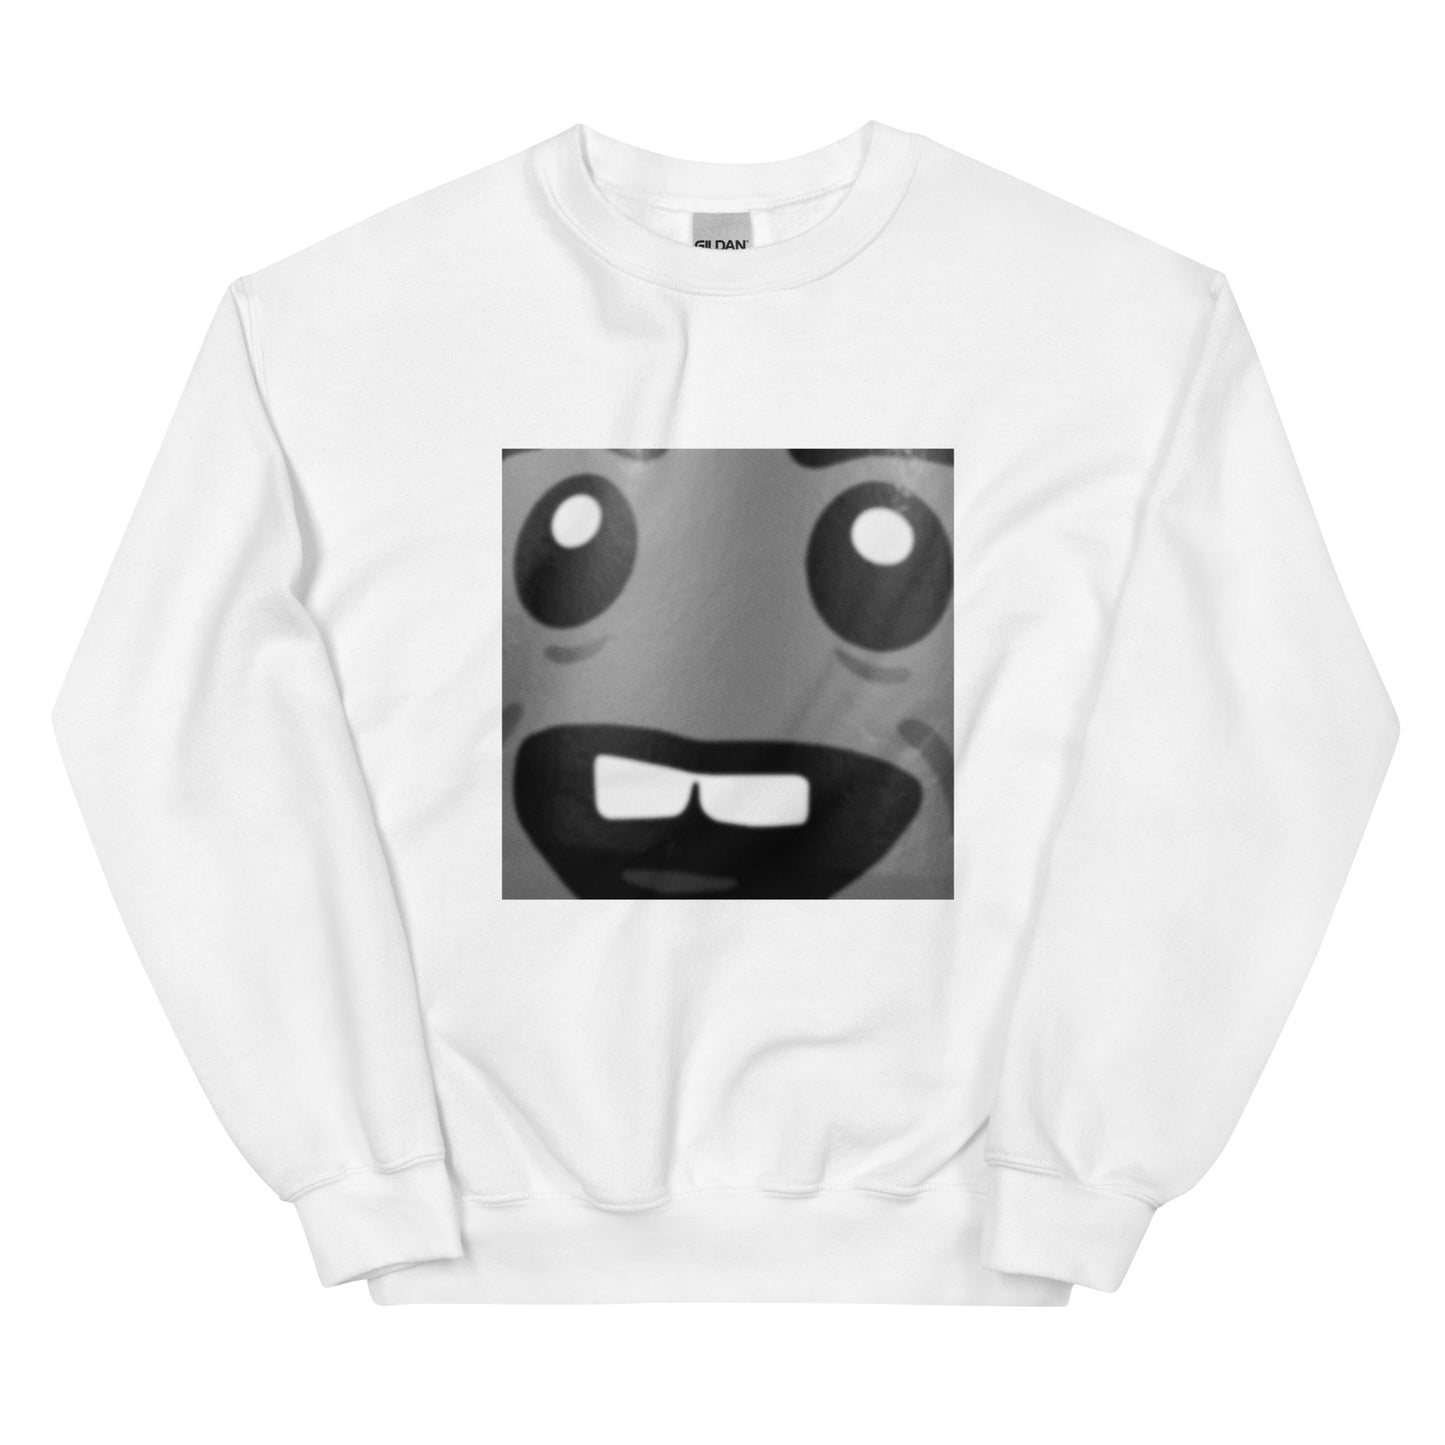 "Tyler, The Creator - Wolf (Alternate “Face” Cover)" Lego Parody Sweatshirt